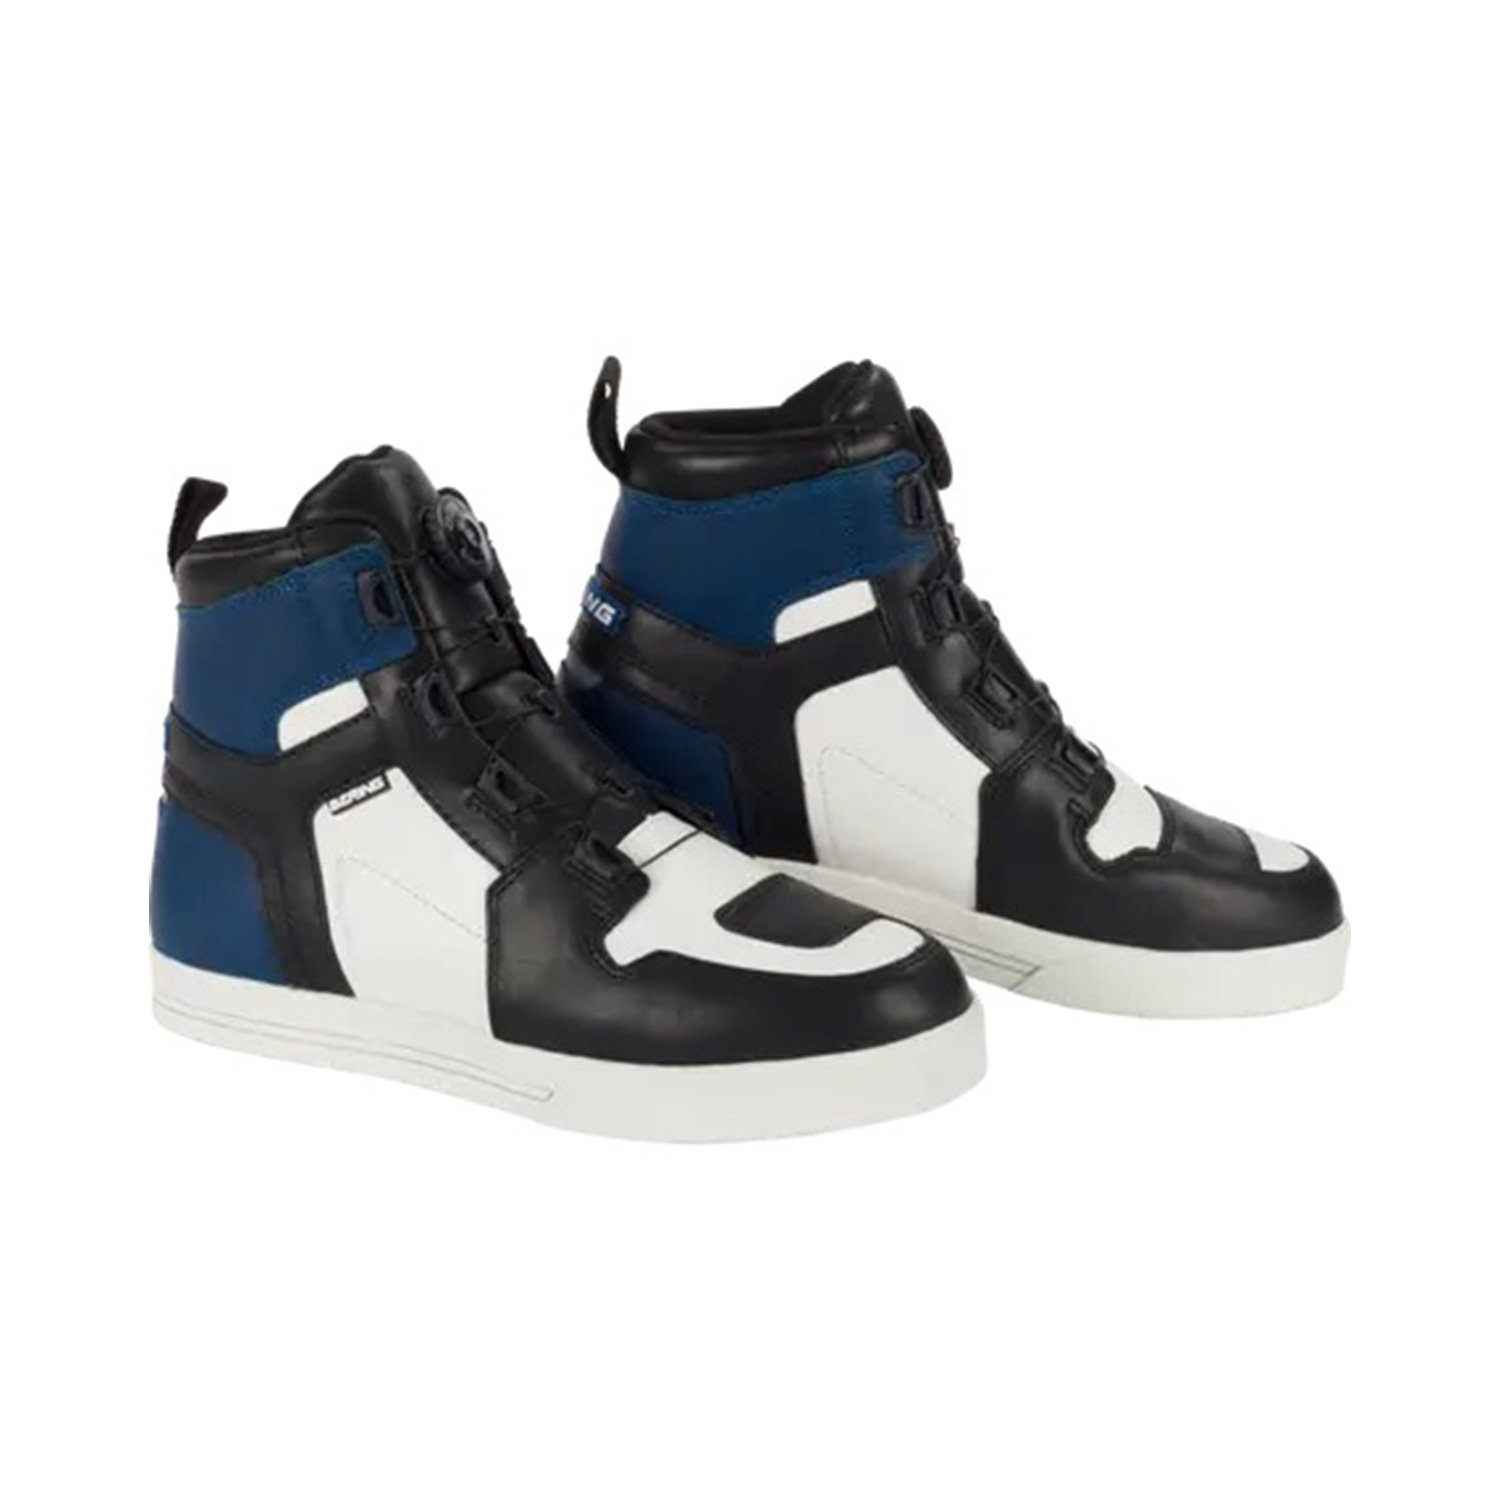 Image of Bering Sneakers Reflex A-Top Black White Blue Size 42 EN